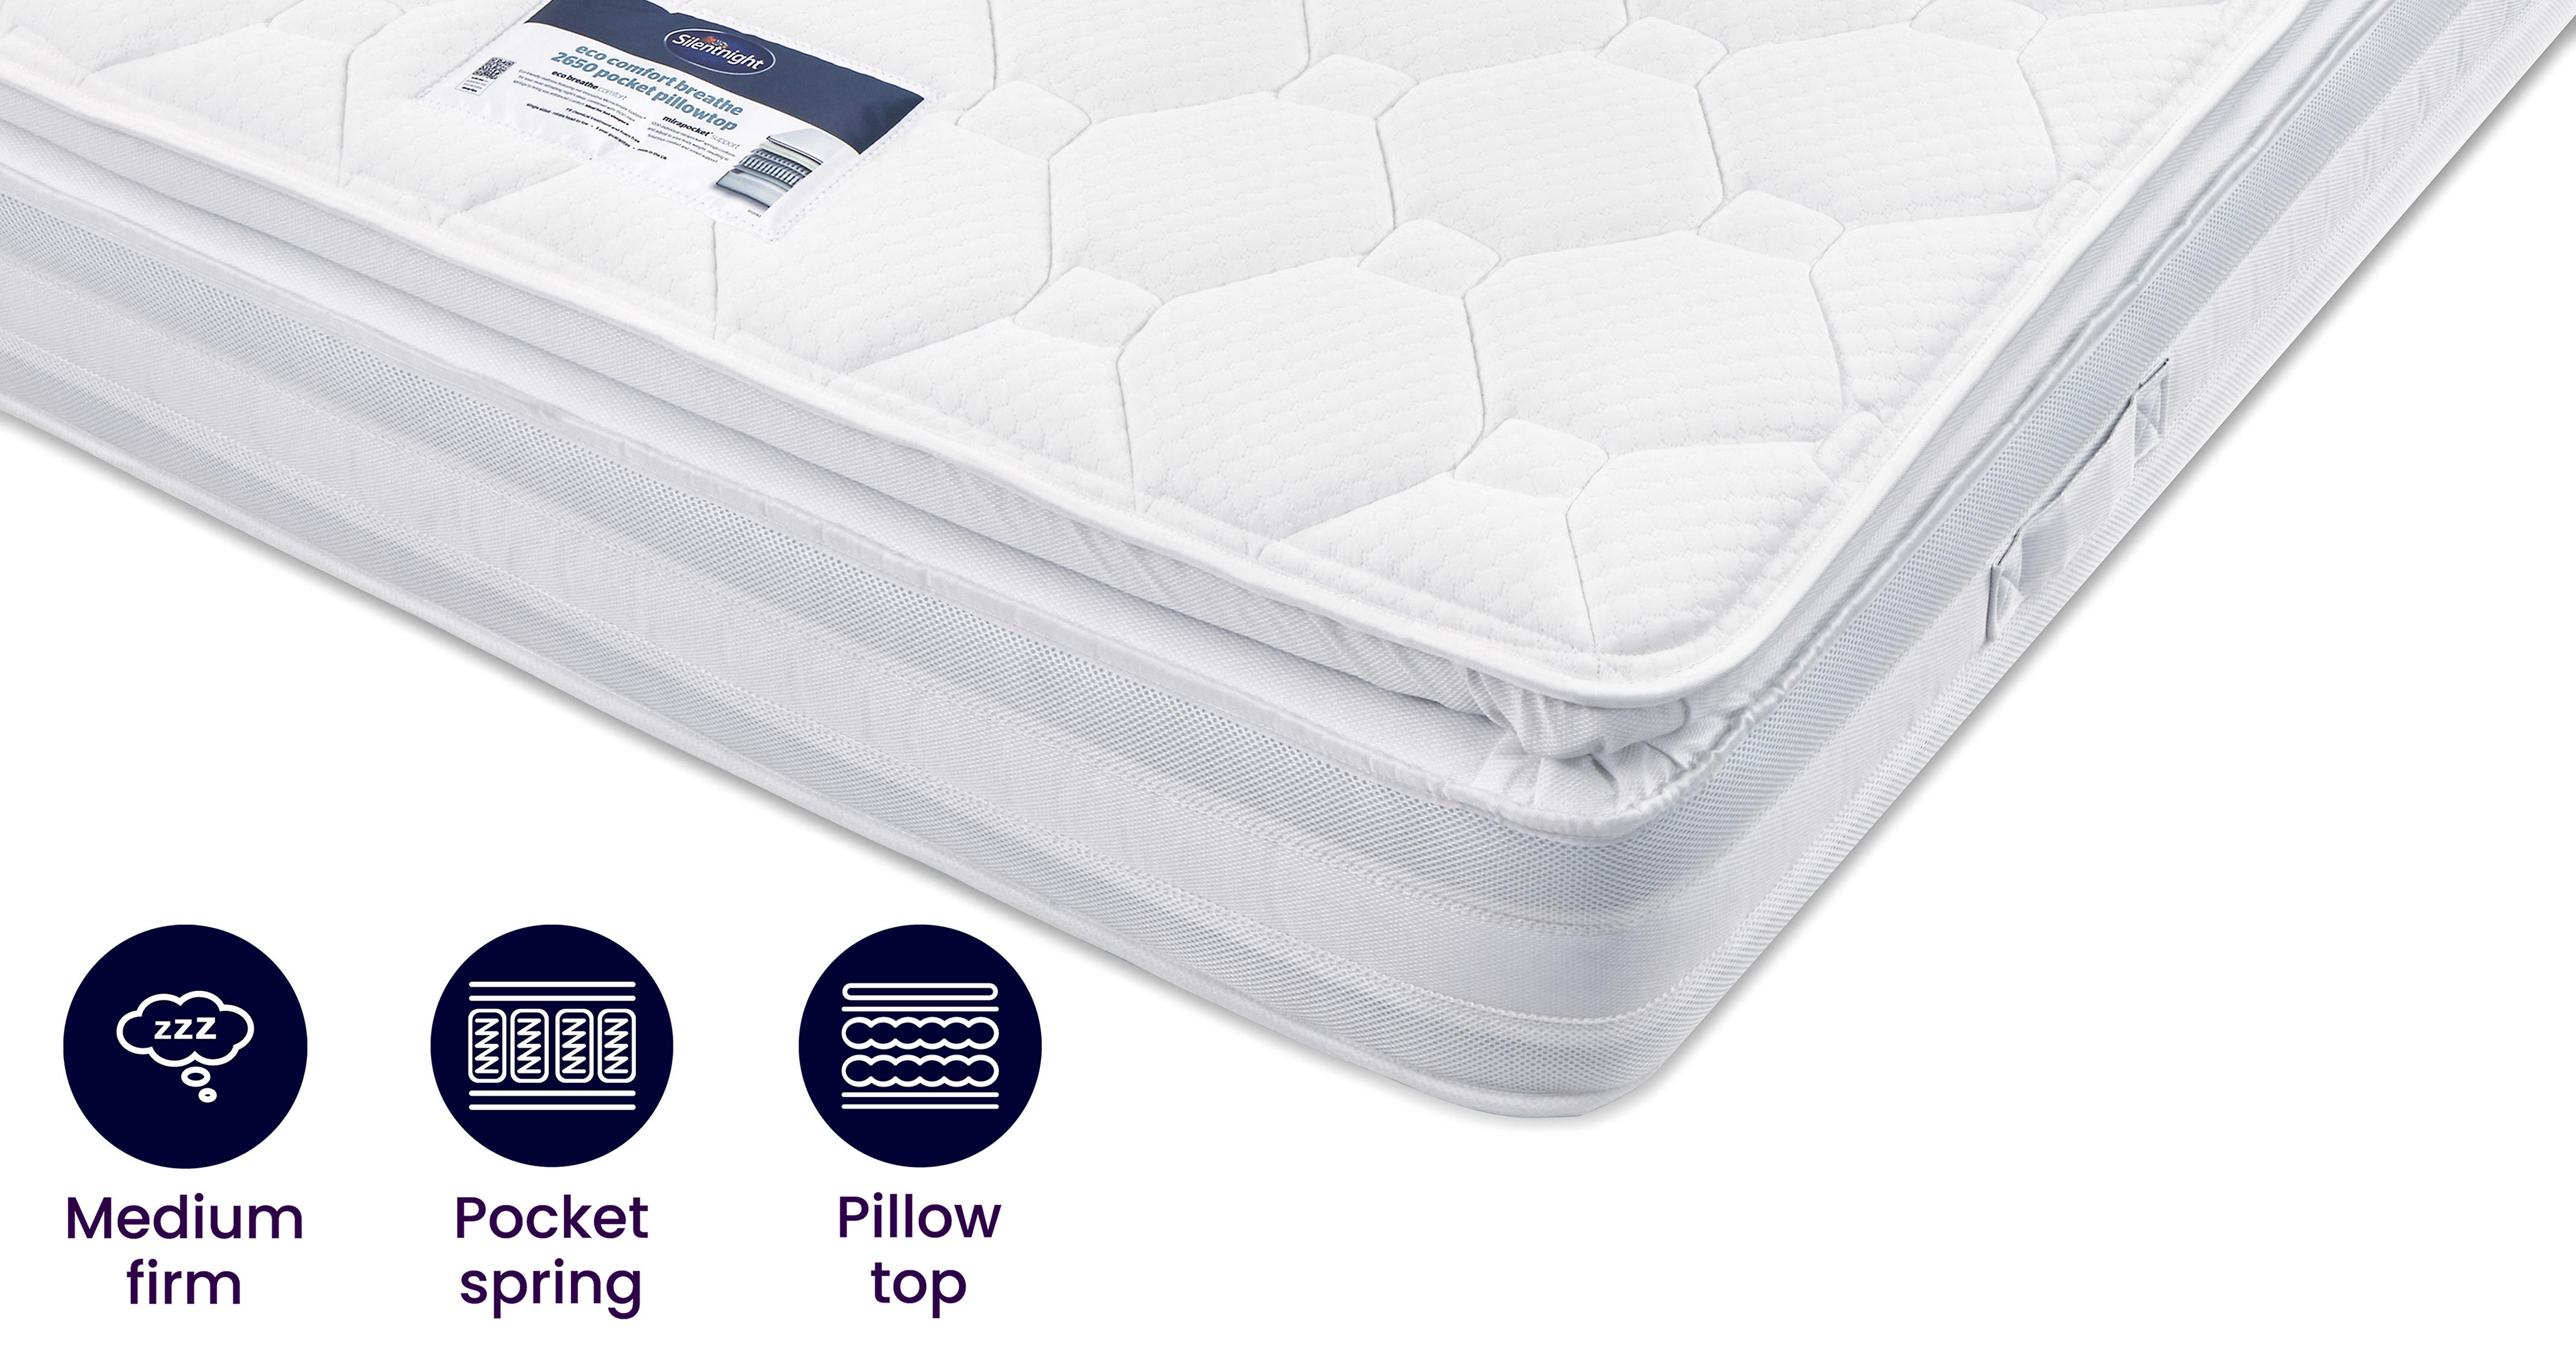 Silentnight Eco Comfort Breathe 1400 Pocket Pillow Top Mattress